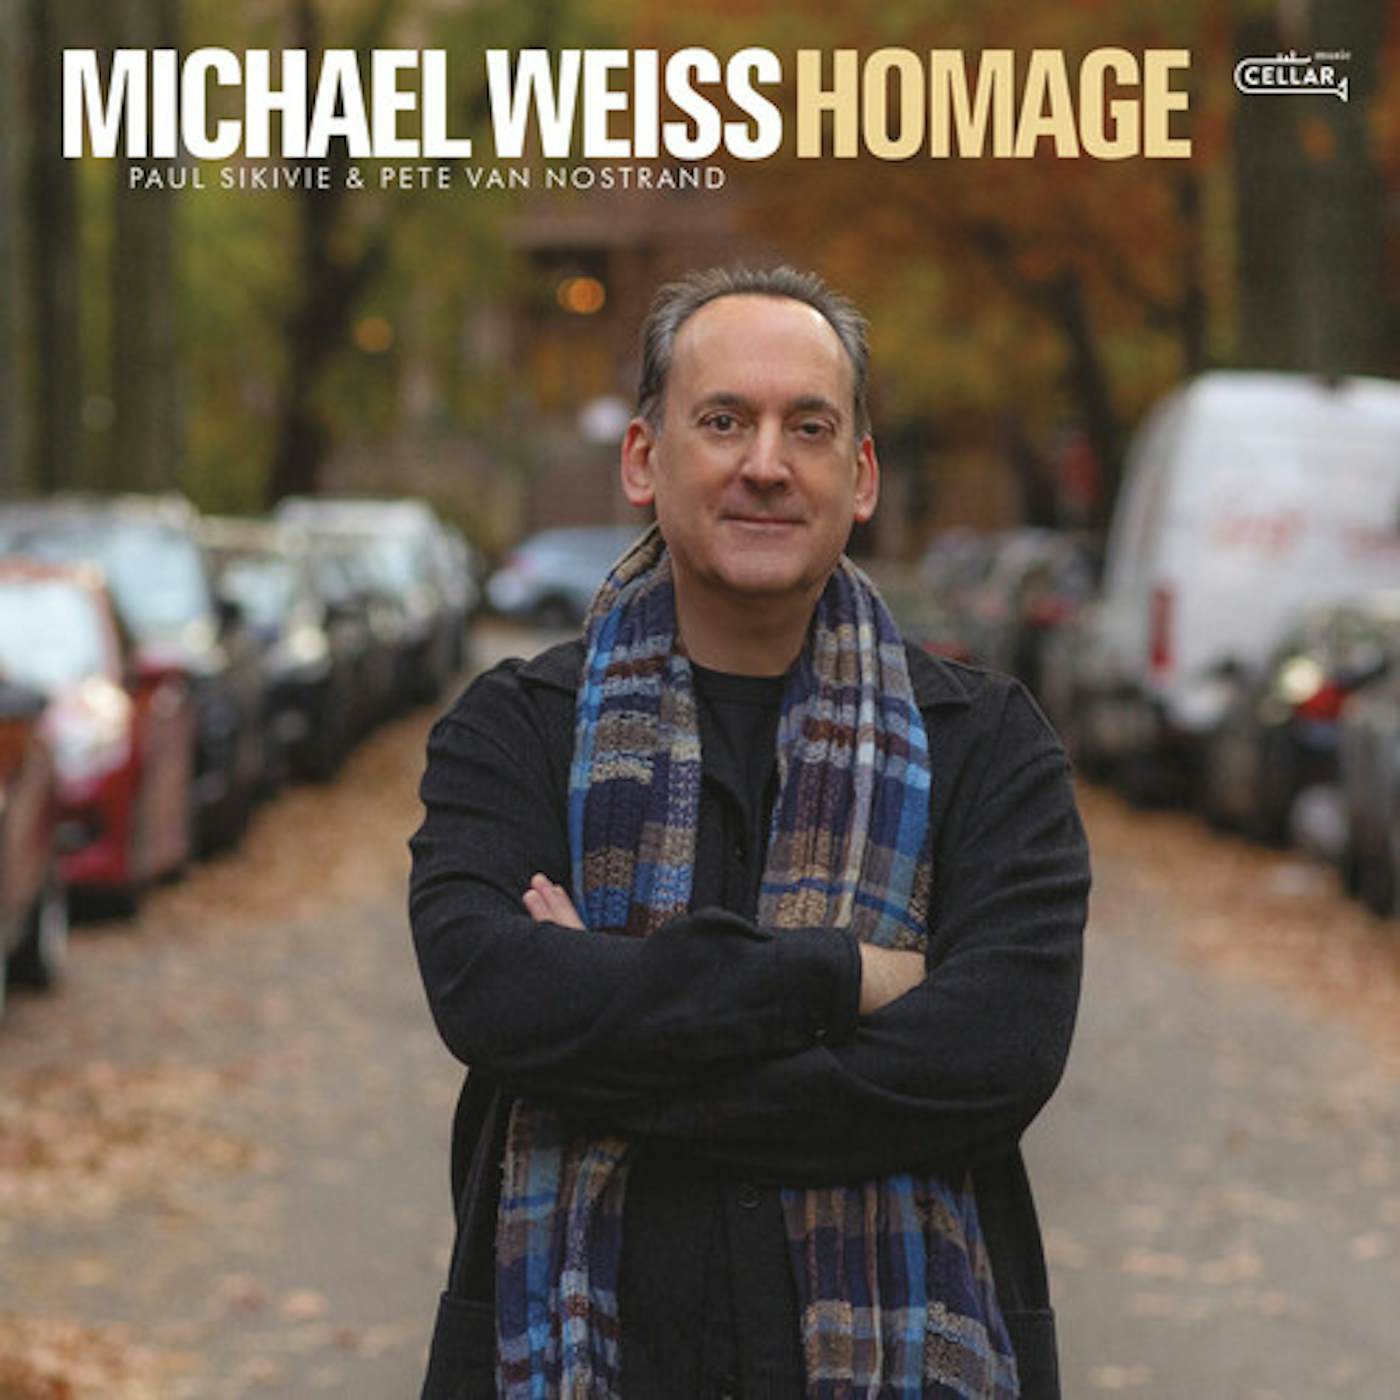 Michael Weiss HOMAGE CD